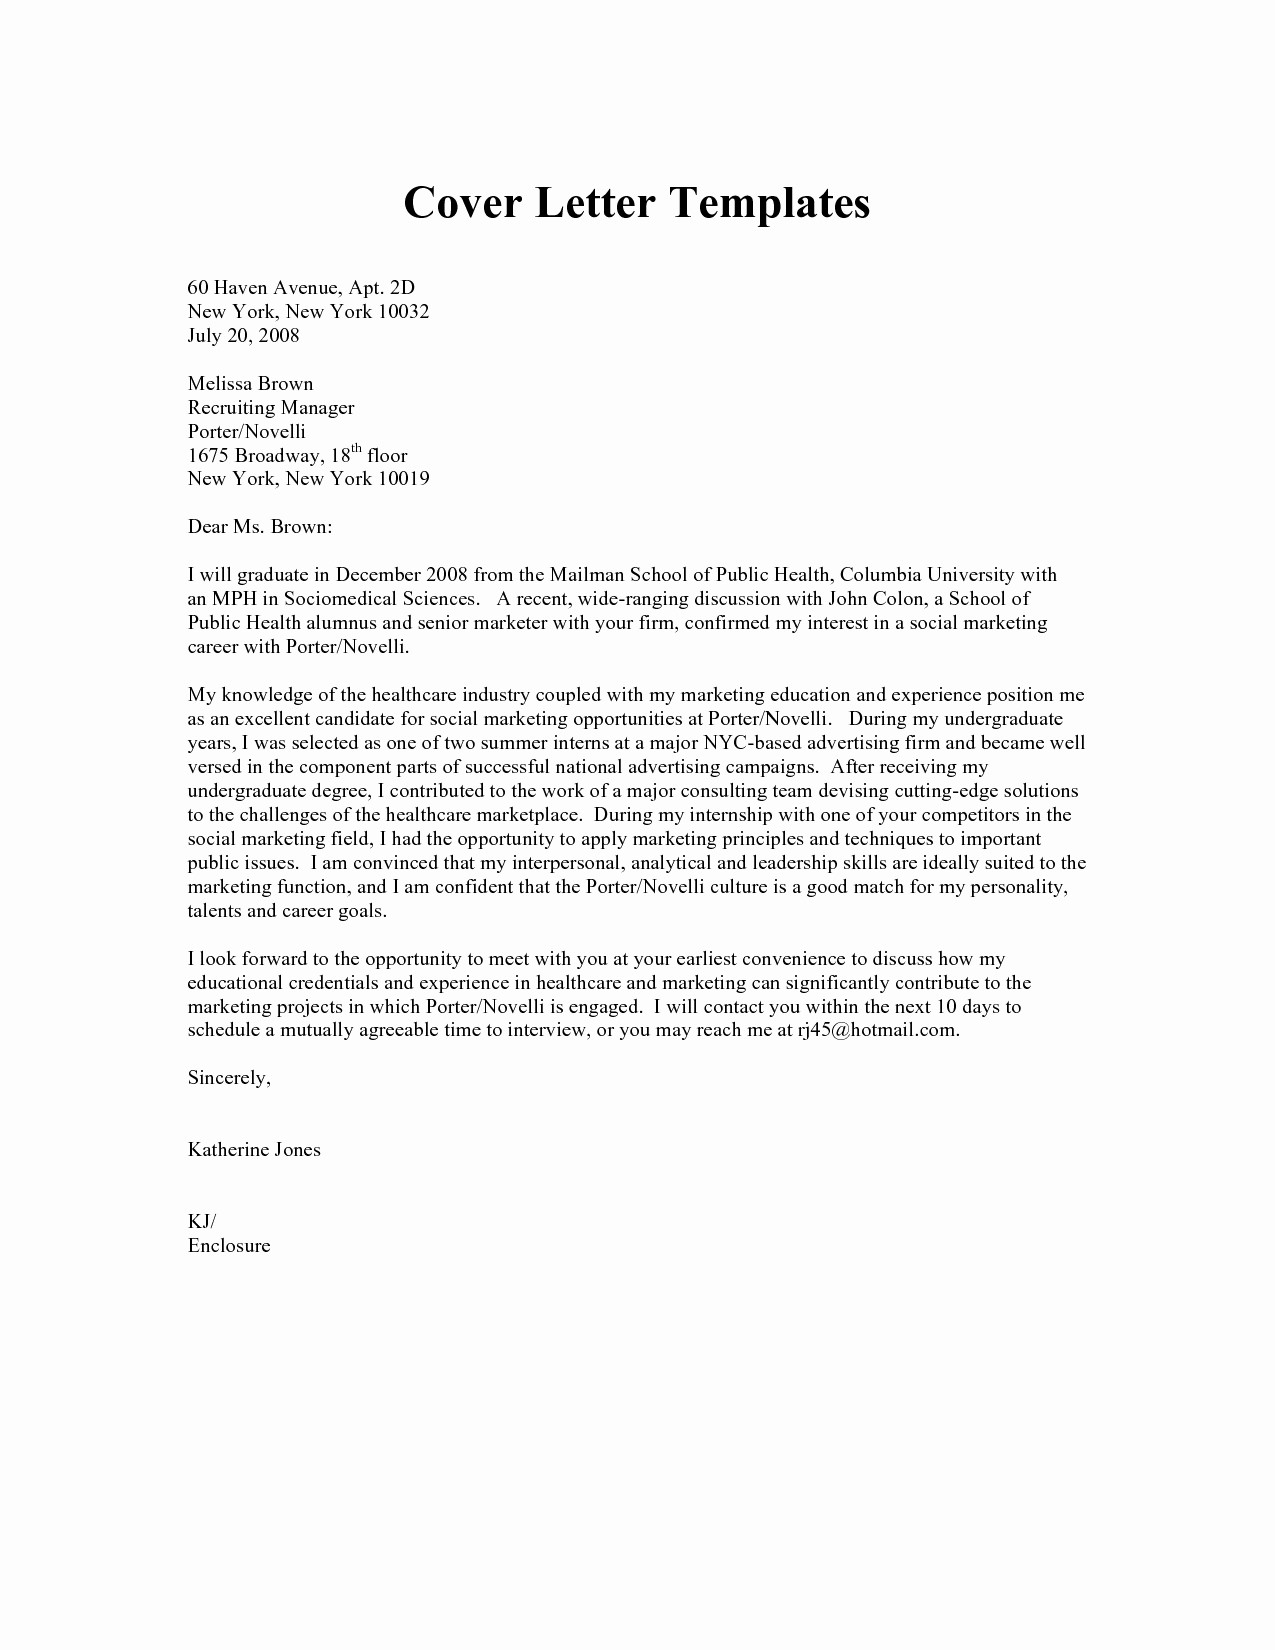 Employment Verification Letter Template Microsoft - Confirmation Job Letter Save Summer associate Cover Letter 23 Od